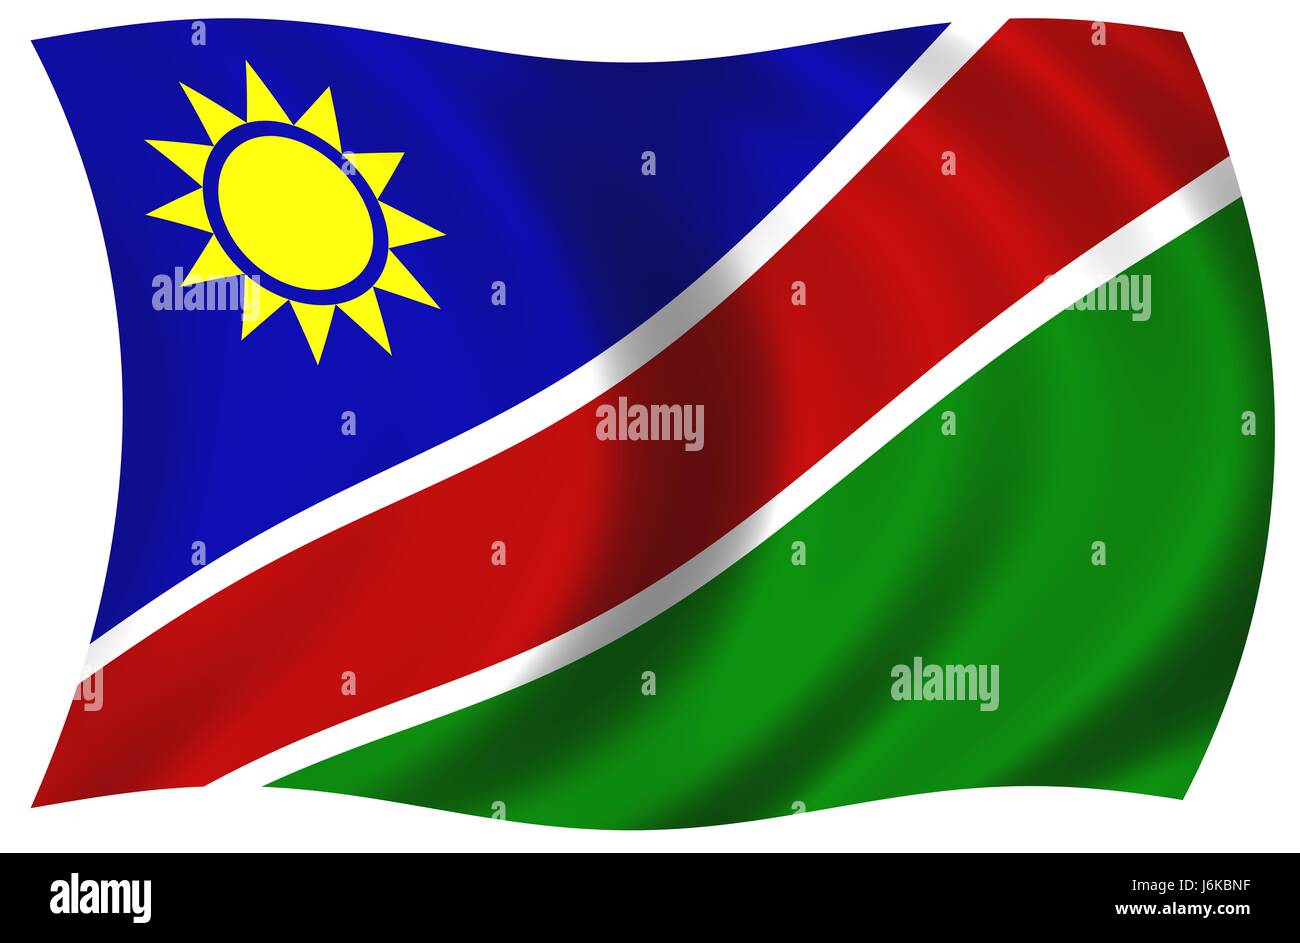 Namibia flagge -Fotos und -Bildmaterial in hoher Auflösung – Alamy